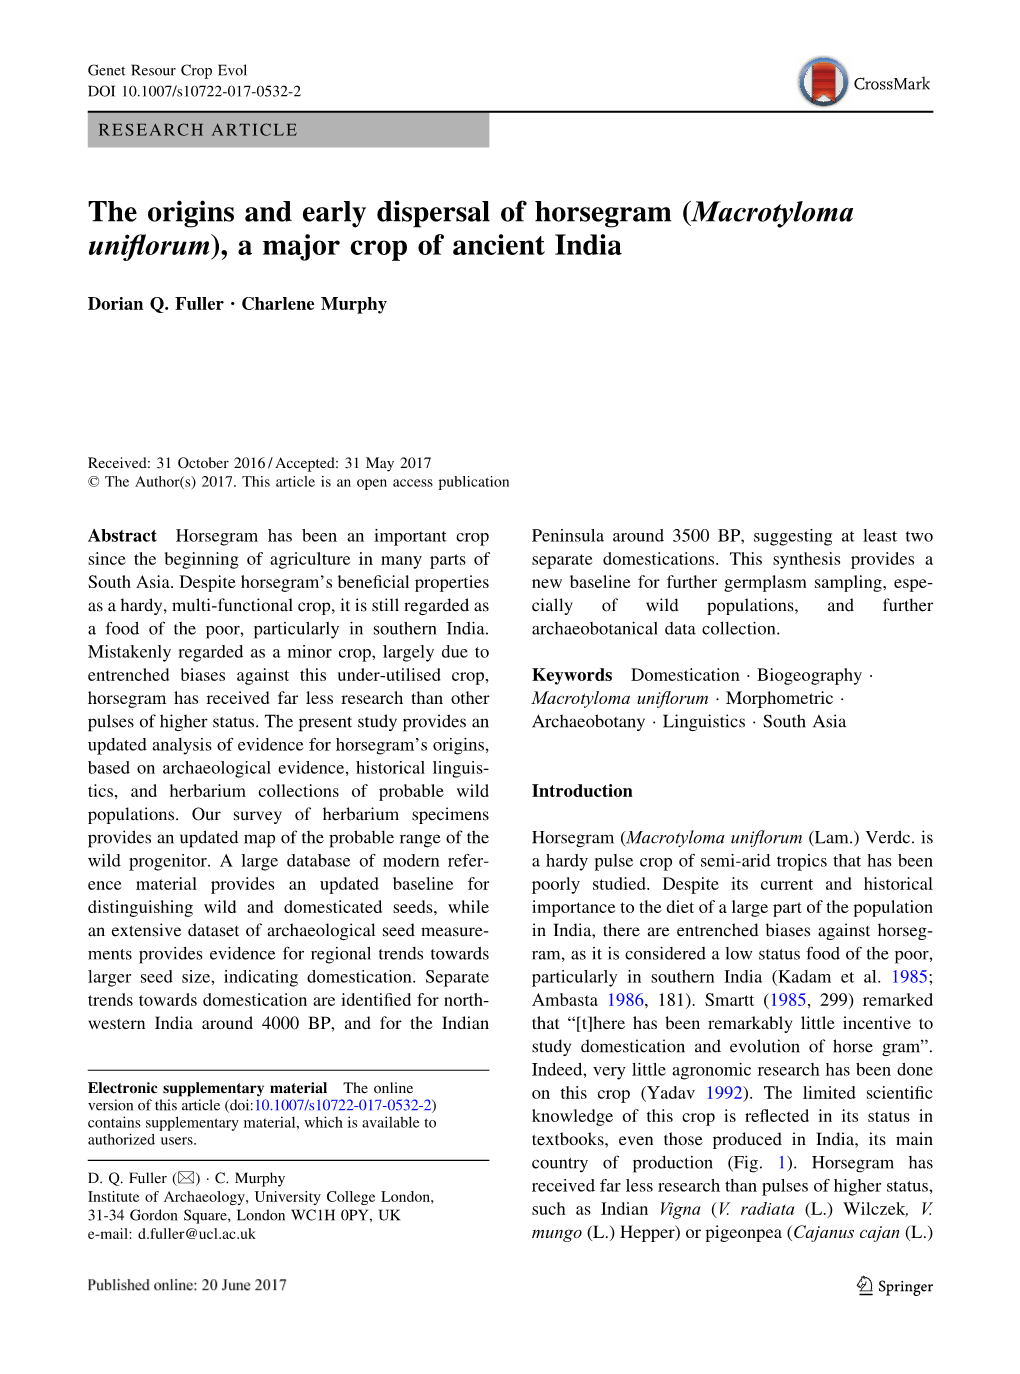 The Origins and Early Dispersal of Horsegram (Macrotyloma Uniflorum